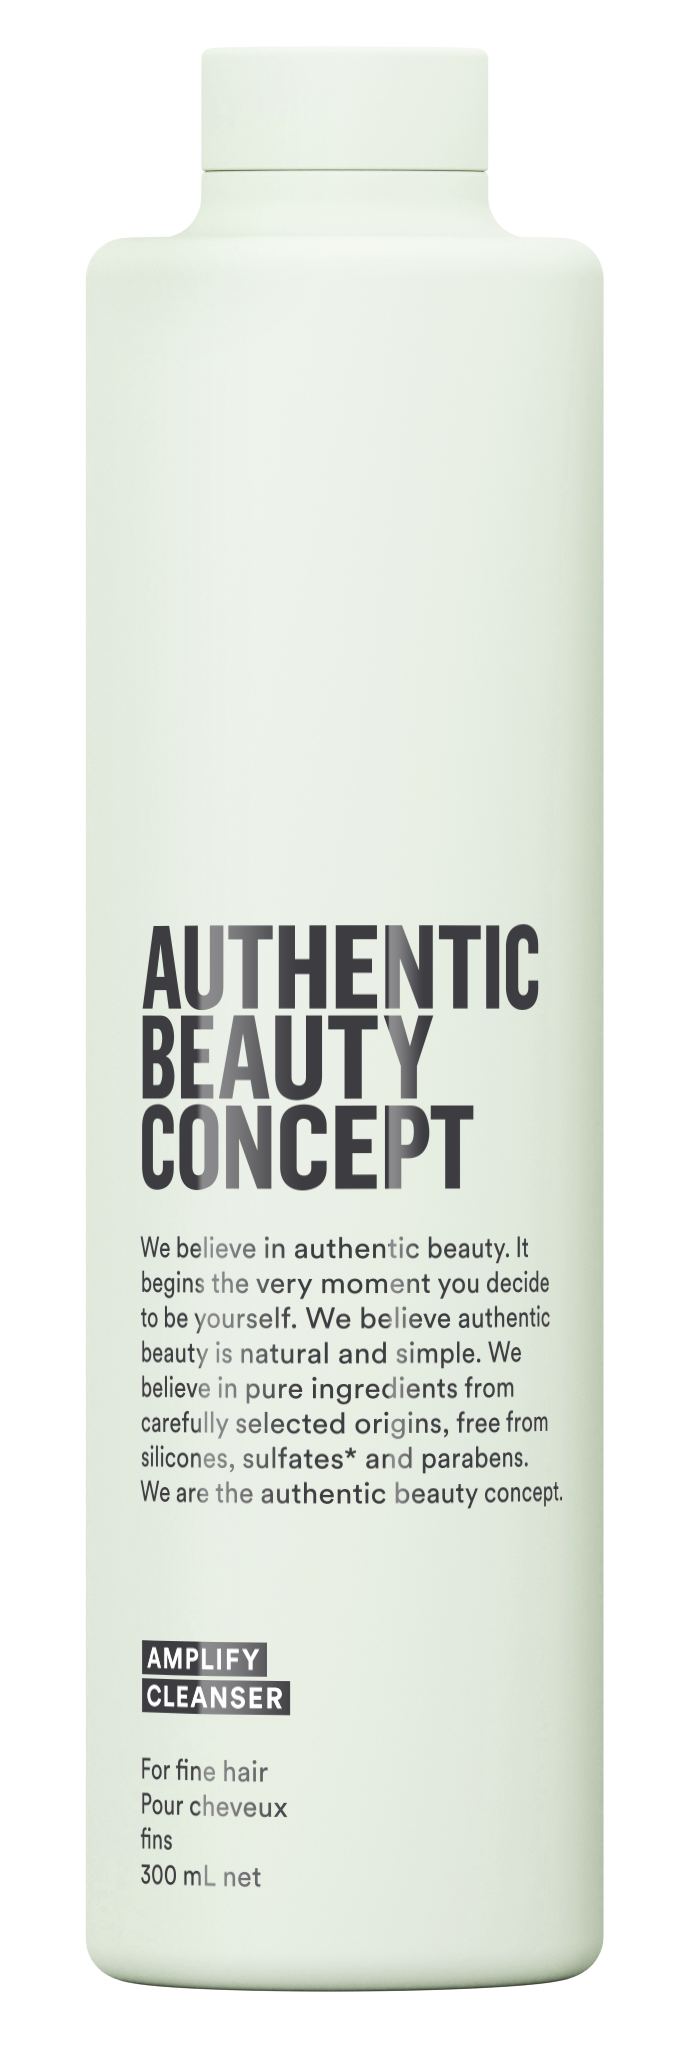 Eds Hair - Authentic Beauty Concept - Amplify Cleanser